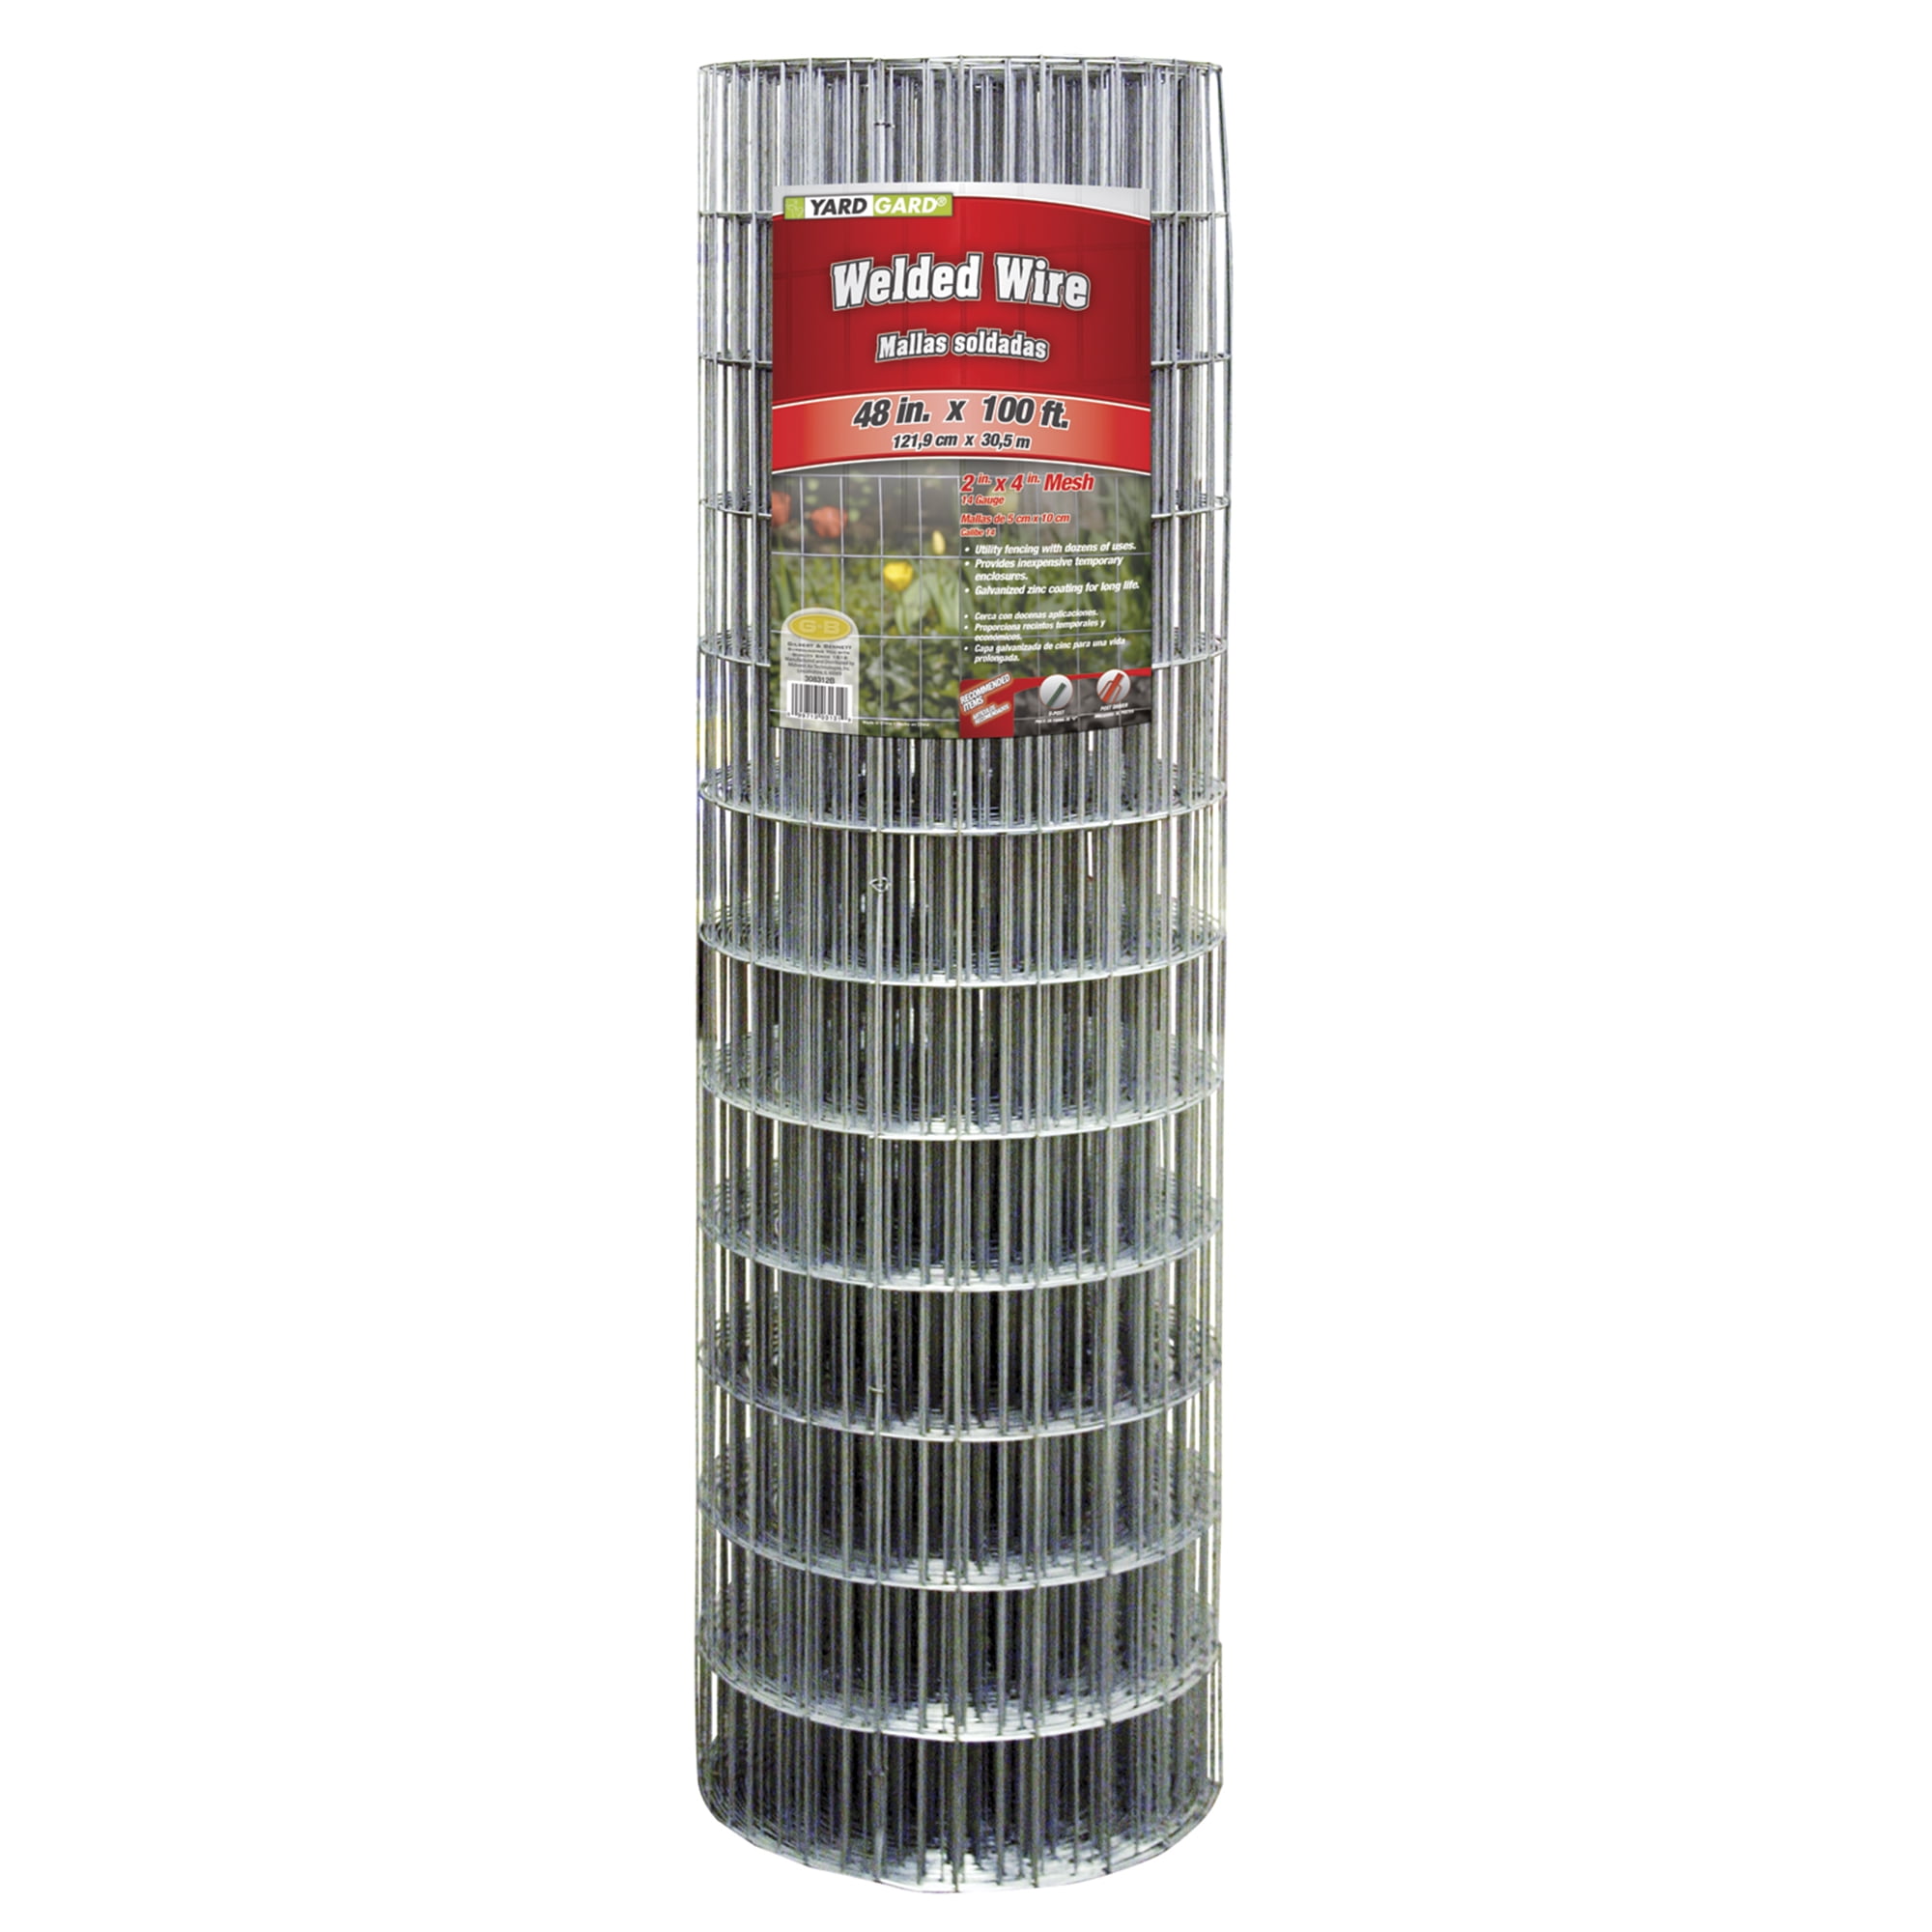 25mt galvanized wire mesh welded rolls mesh 5x7.5cm for fencing garden 